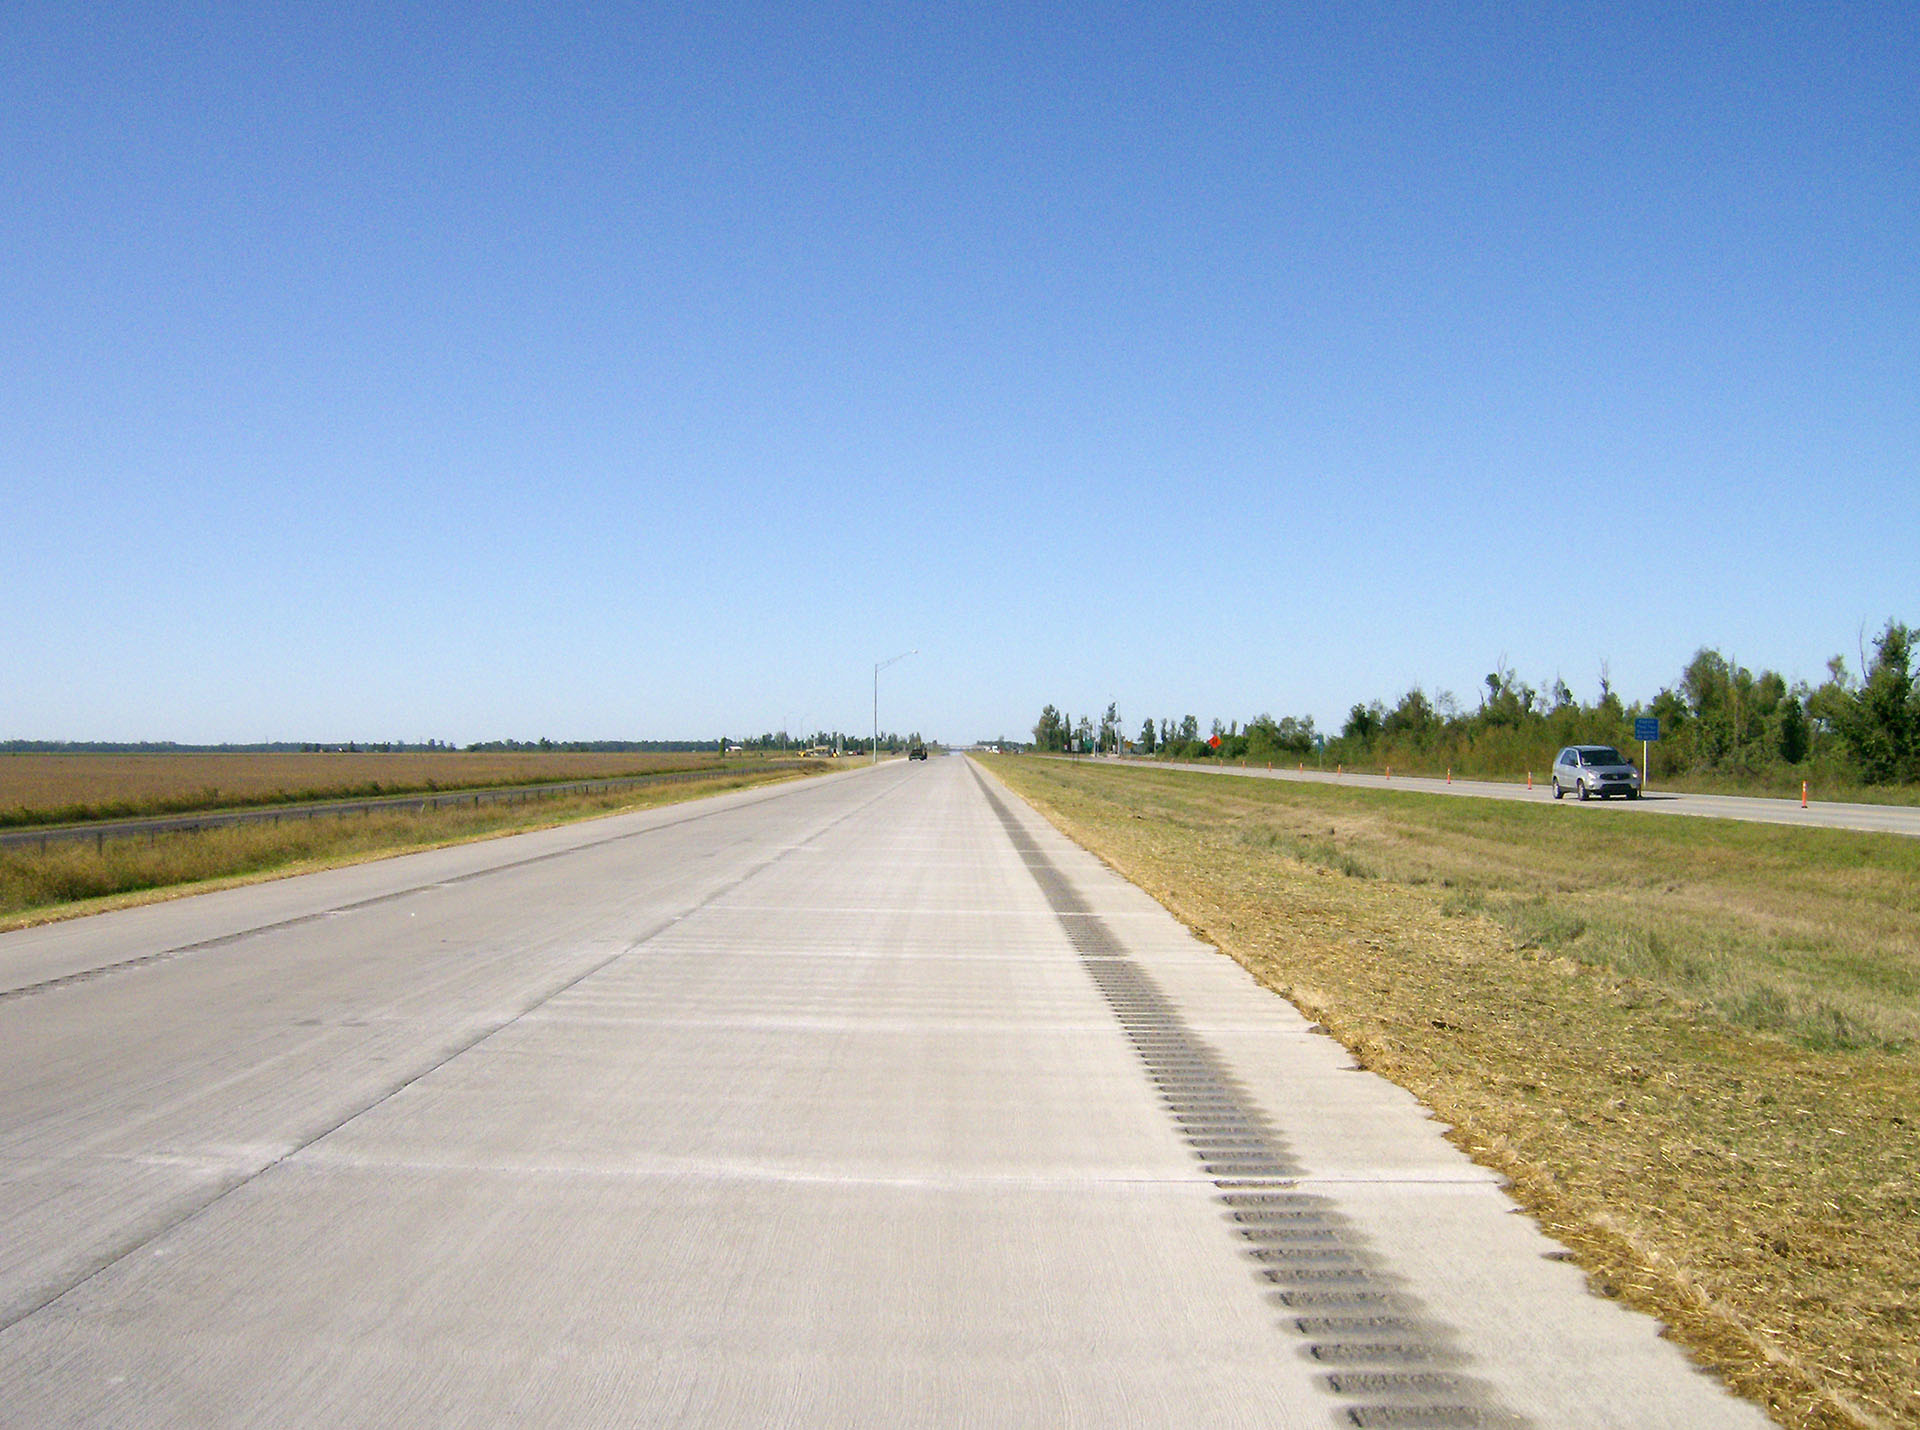 Four-lane rural concrete highway.